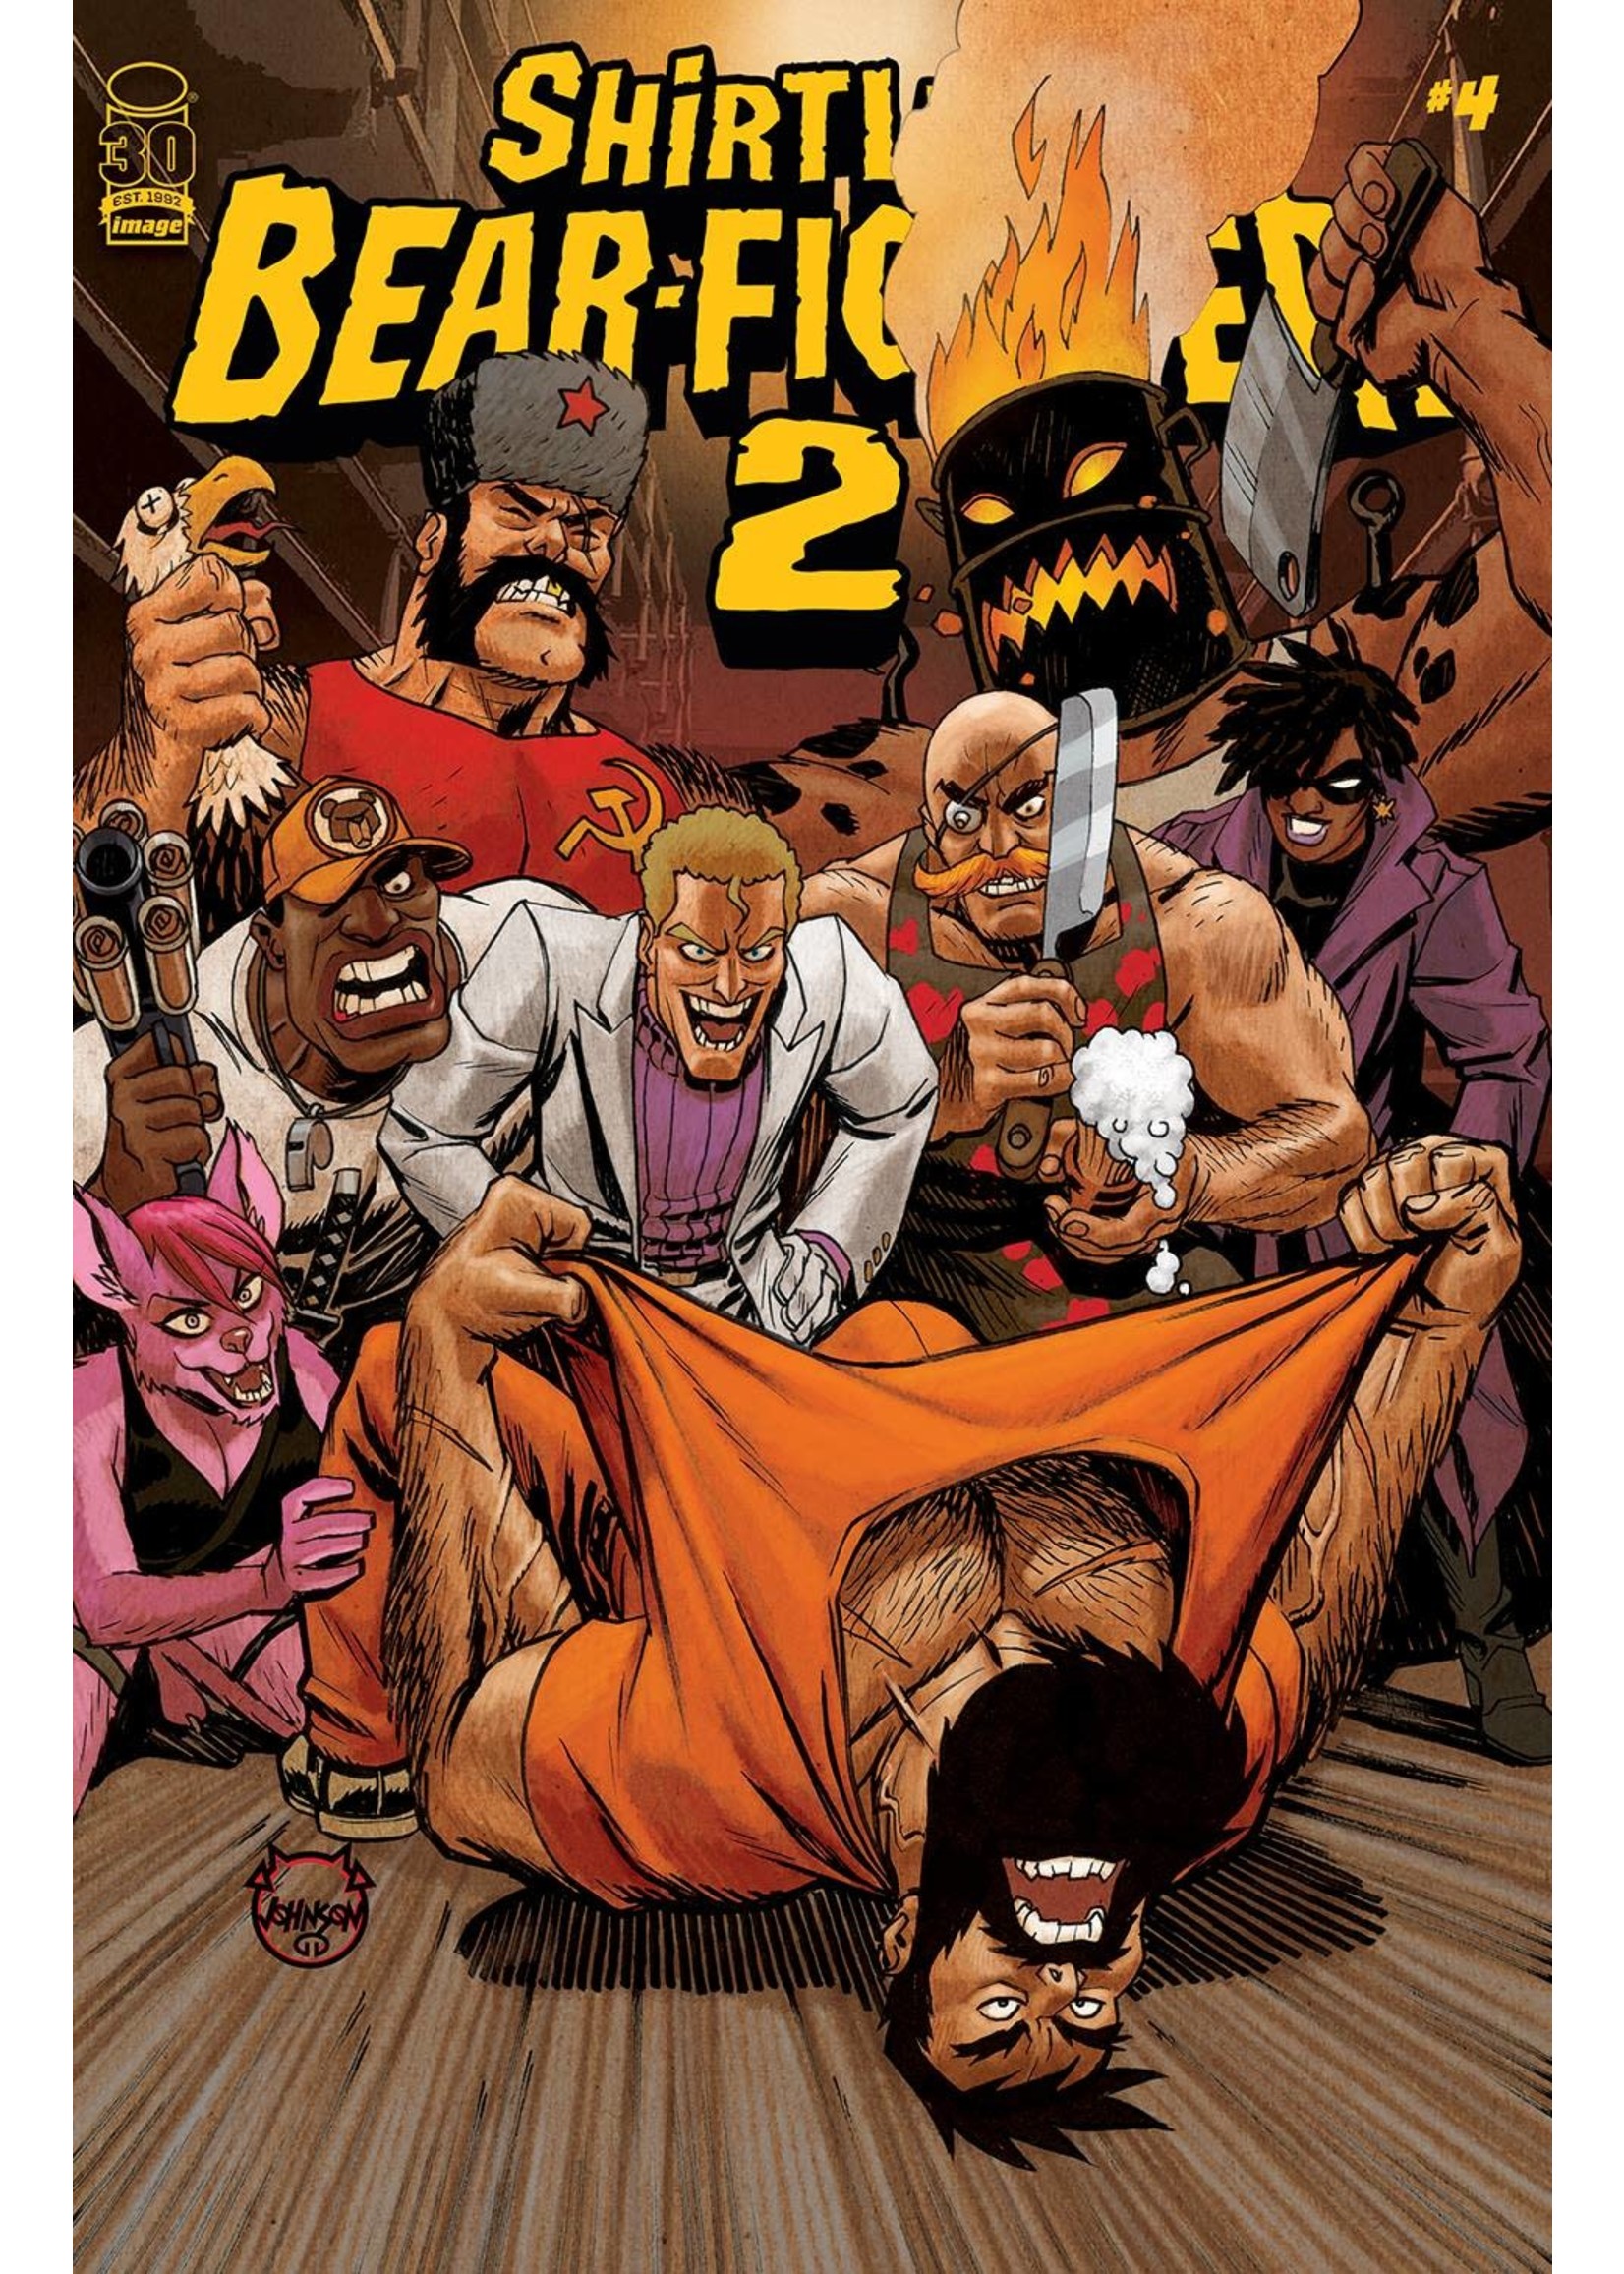 IMAGE COMICS SHIRTLESS BEAR-FIGHTER 2 #4 (OF 7) CVR A JOHNSON